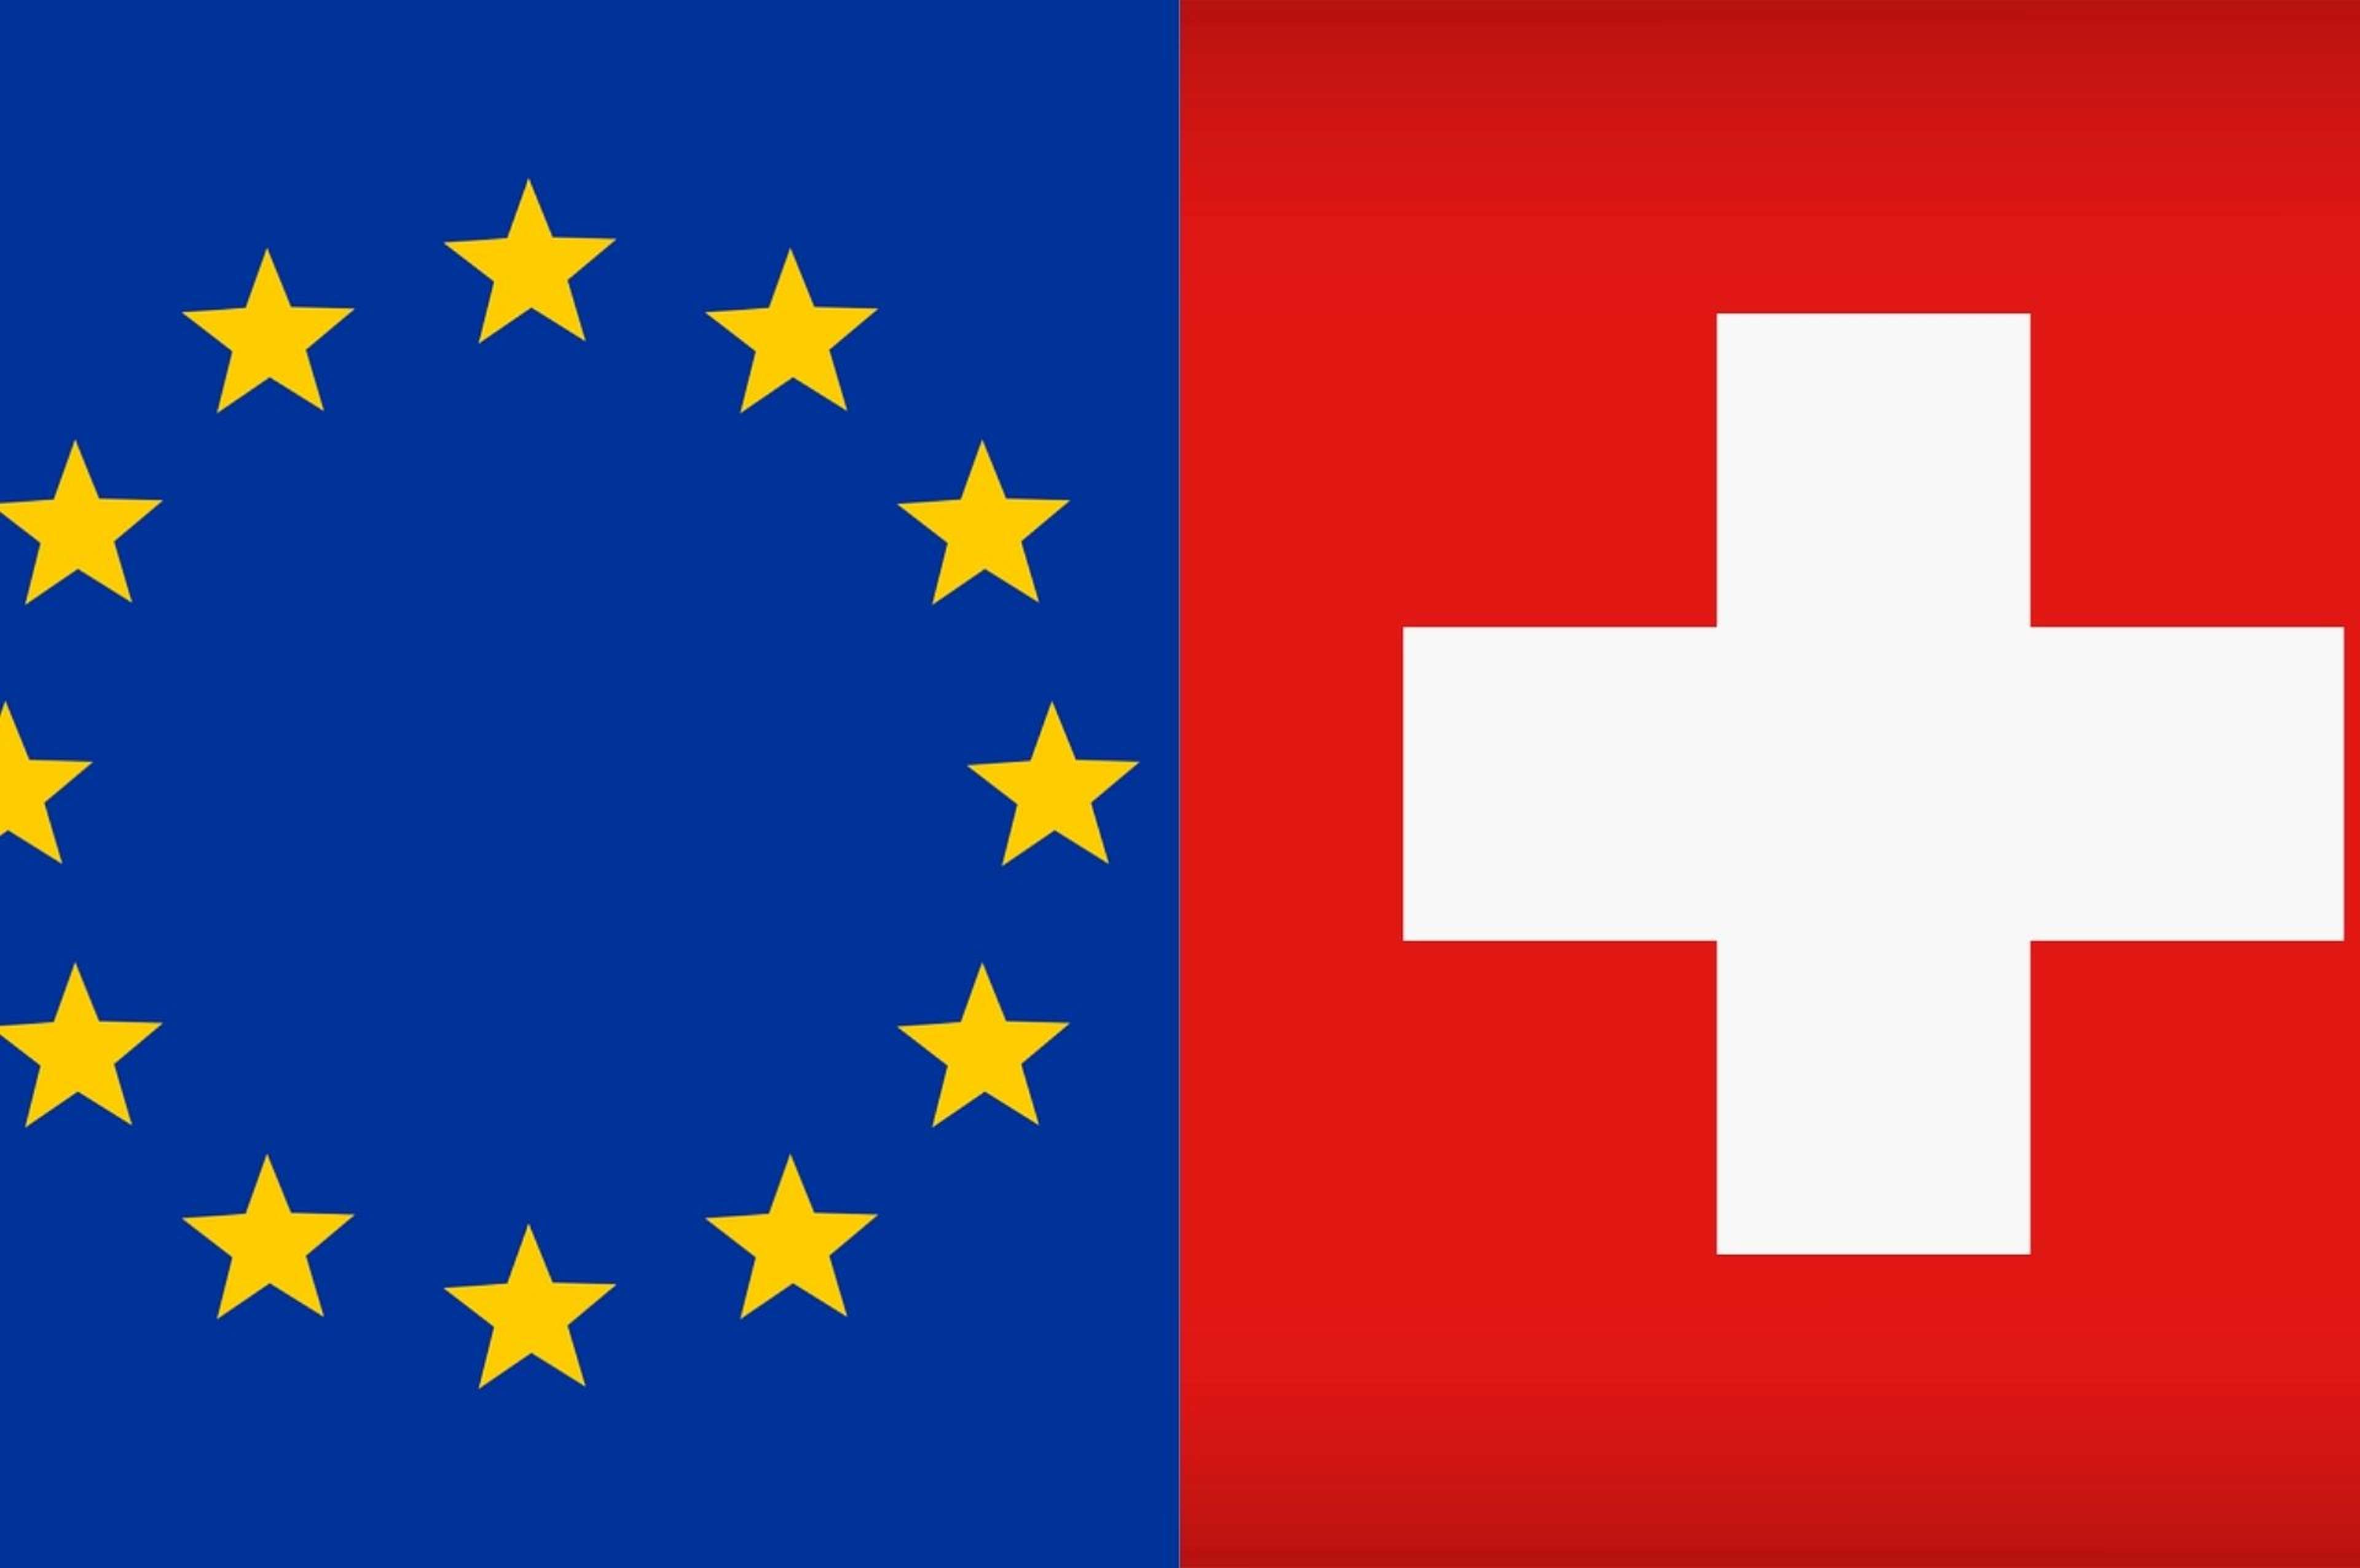 /2021/05/suisse-acord-cadre-ue-union-europeenne-negociations-adhesion-referendum-vote